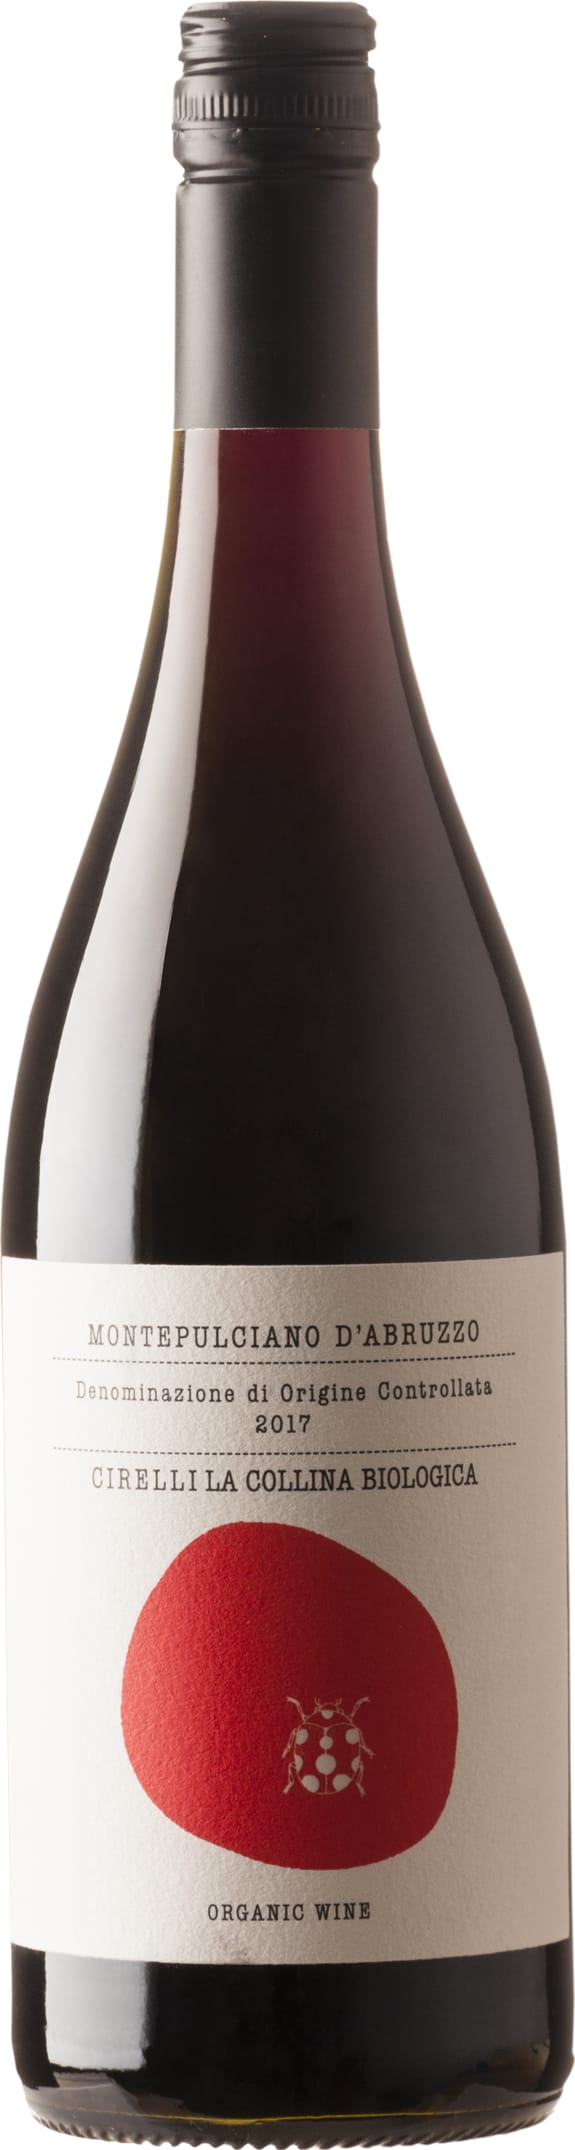 Francesco Cirelli Montepulciano d'Abruzzo DOC Anfora Organic 2021 75cl - Buy Francesco Cirelli Wines from GREAT WINES DIRECT wine shop